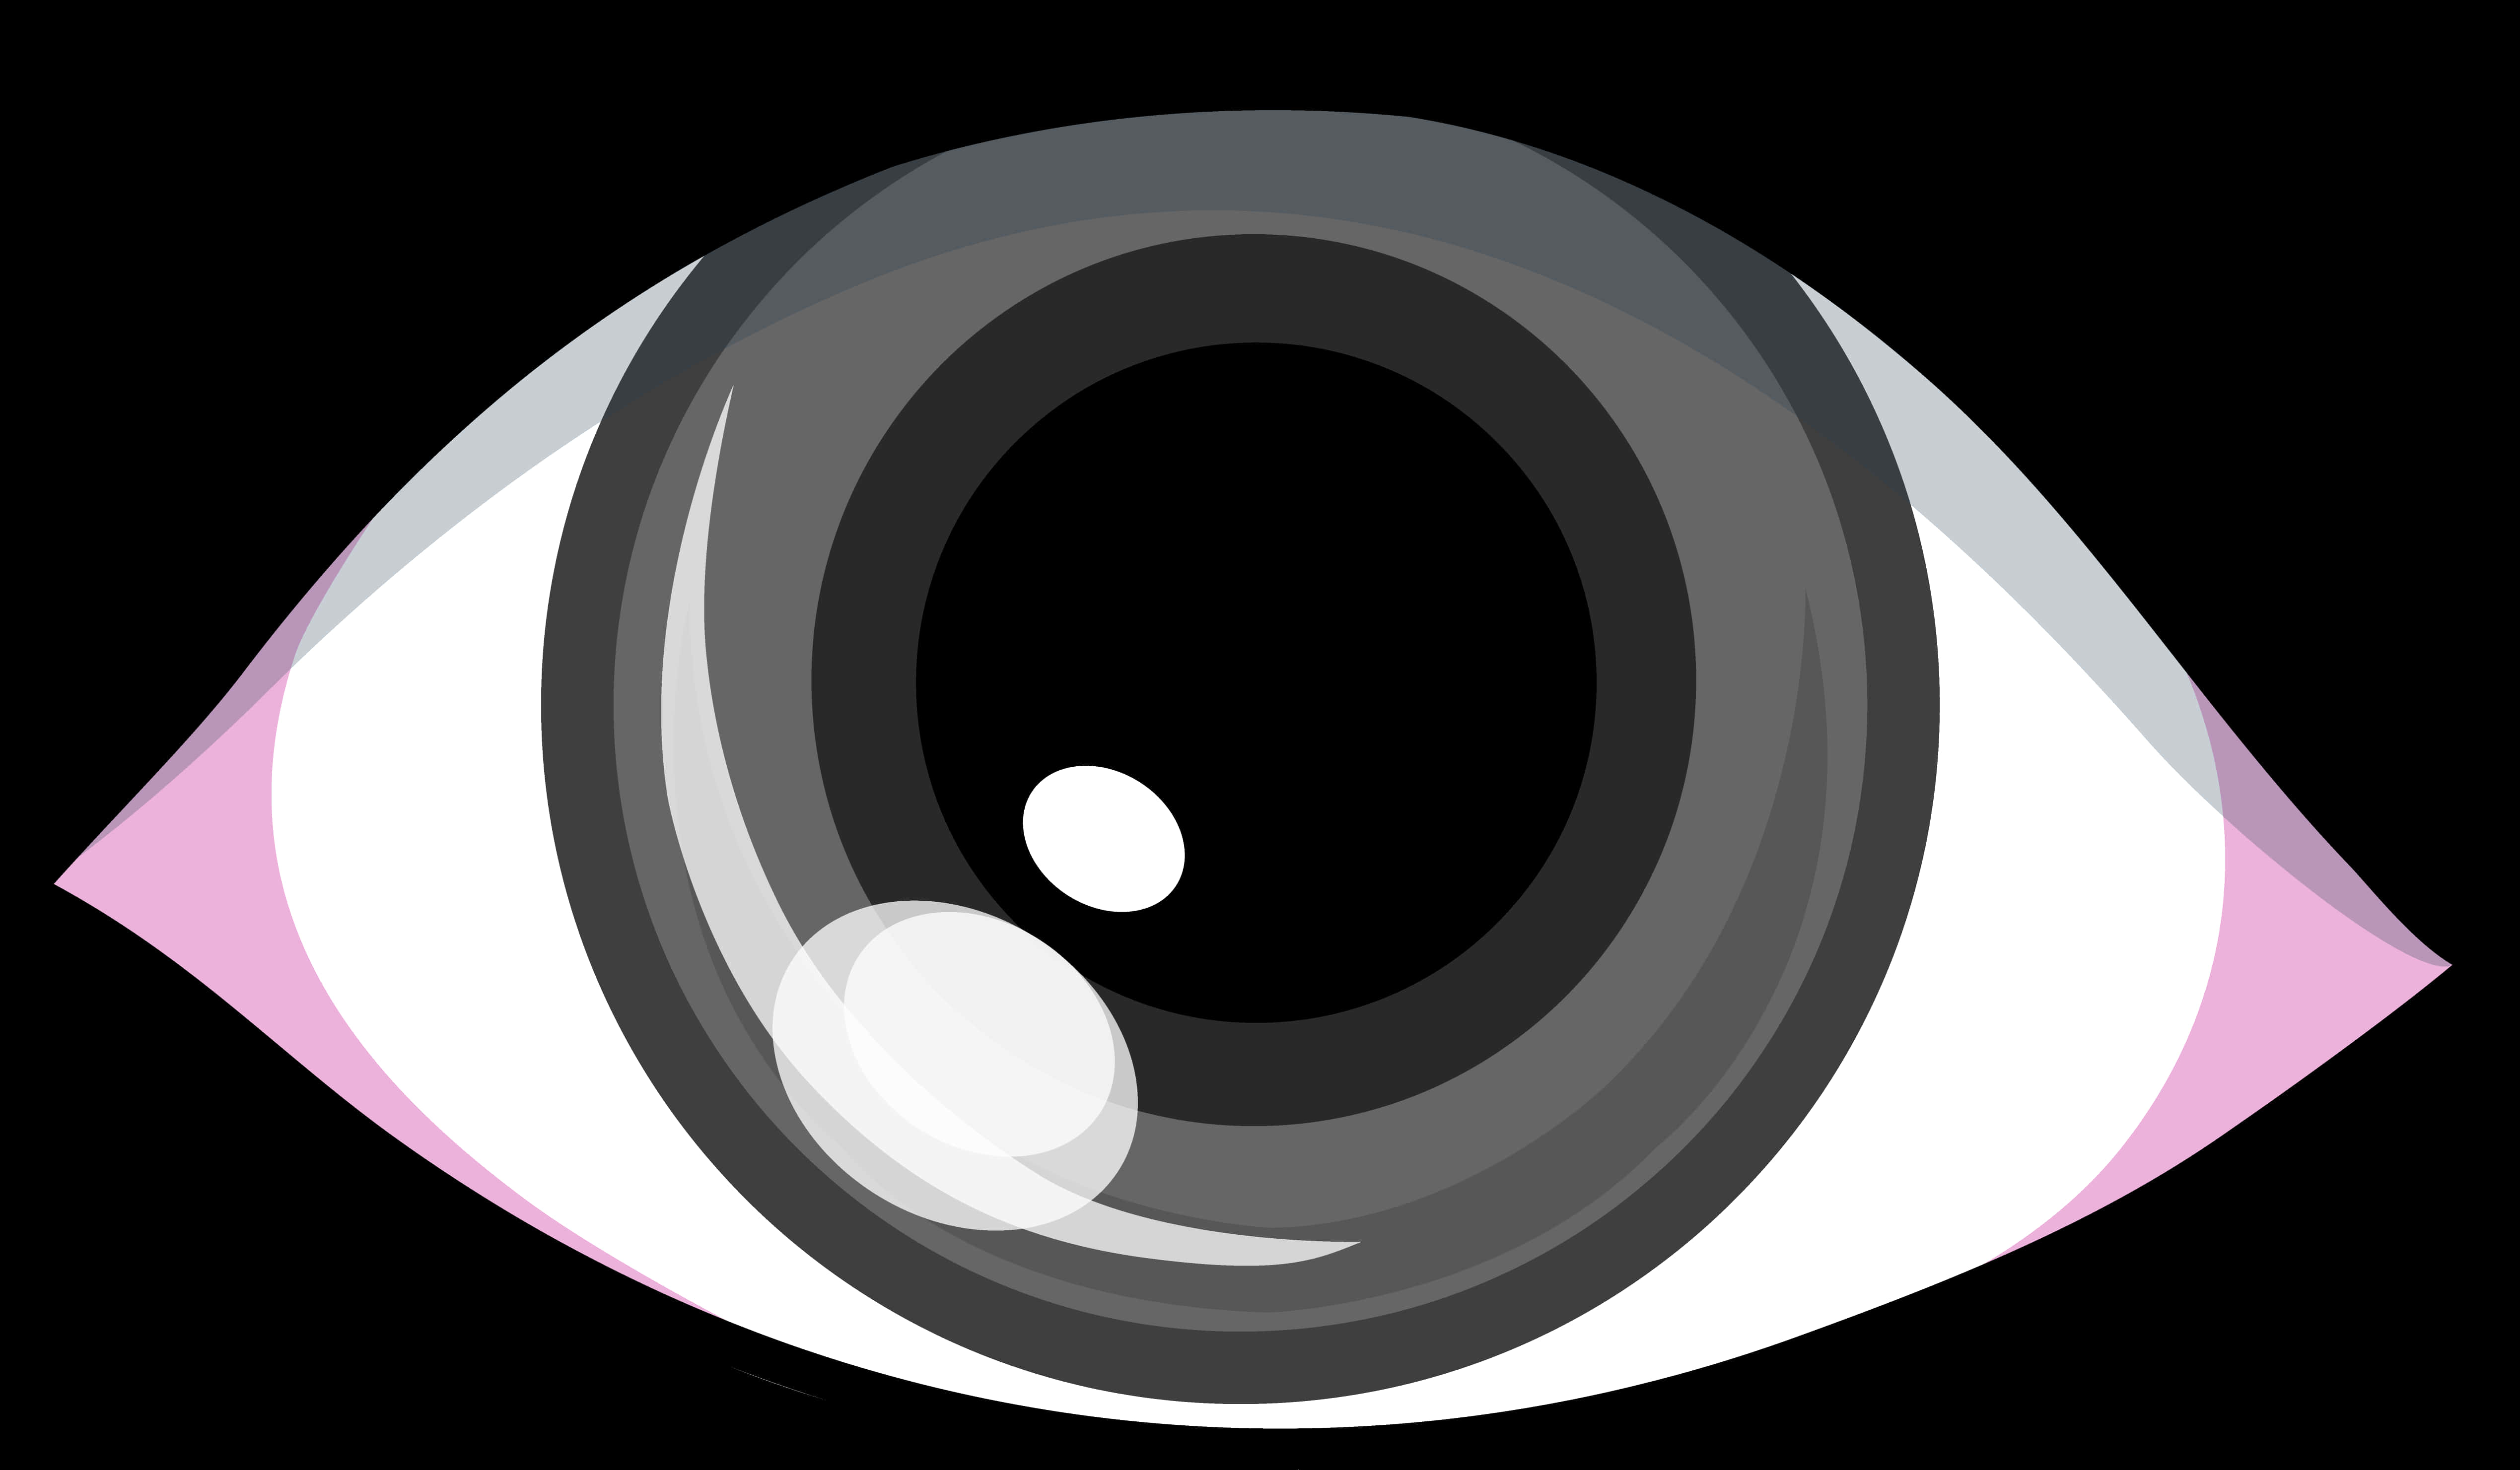 Abstract Eye Illustration.jpg